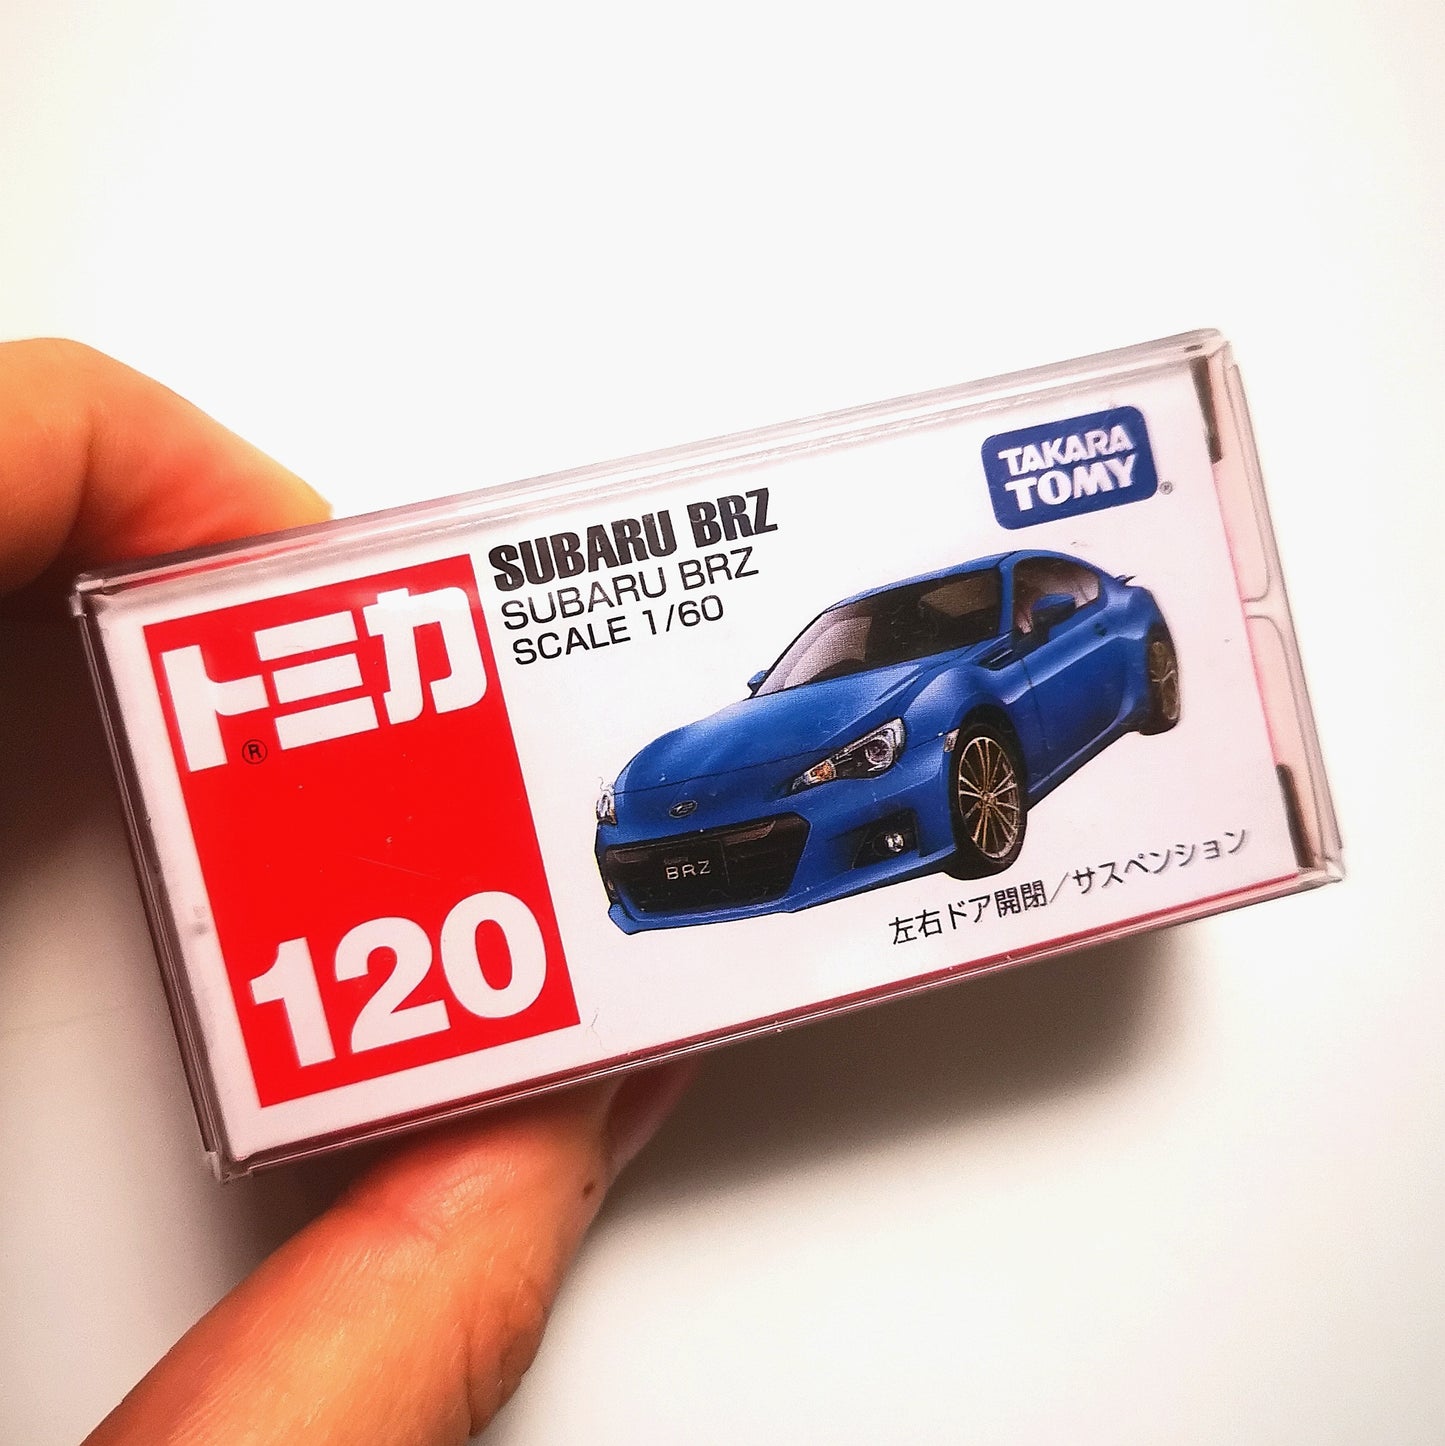 TOMICA #120 Subaru Brz 1:60 SCALE NEW IN Box